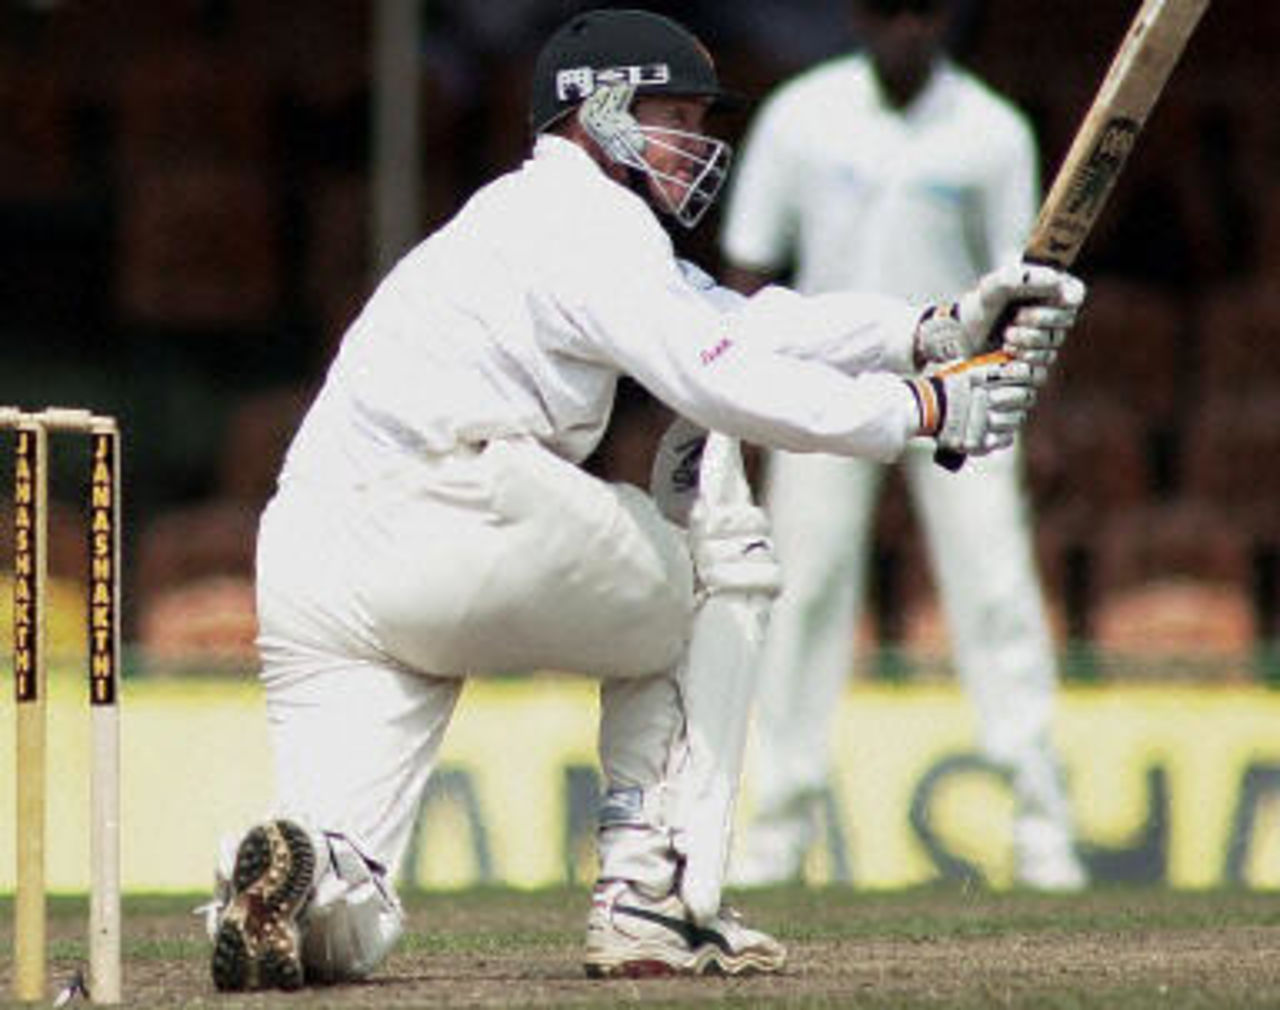 2nd Test: Sri Lanka v Zimbabwe at Asgiriya International Stadium in Kandy,Janashakthi National Test Series Dec 2001-Jan 2002.